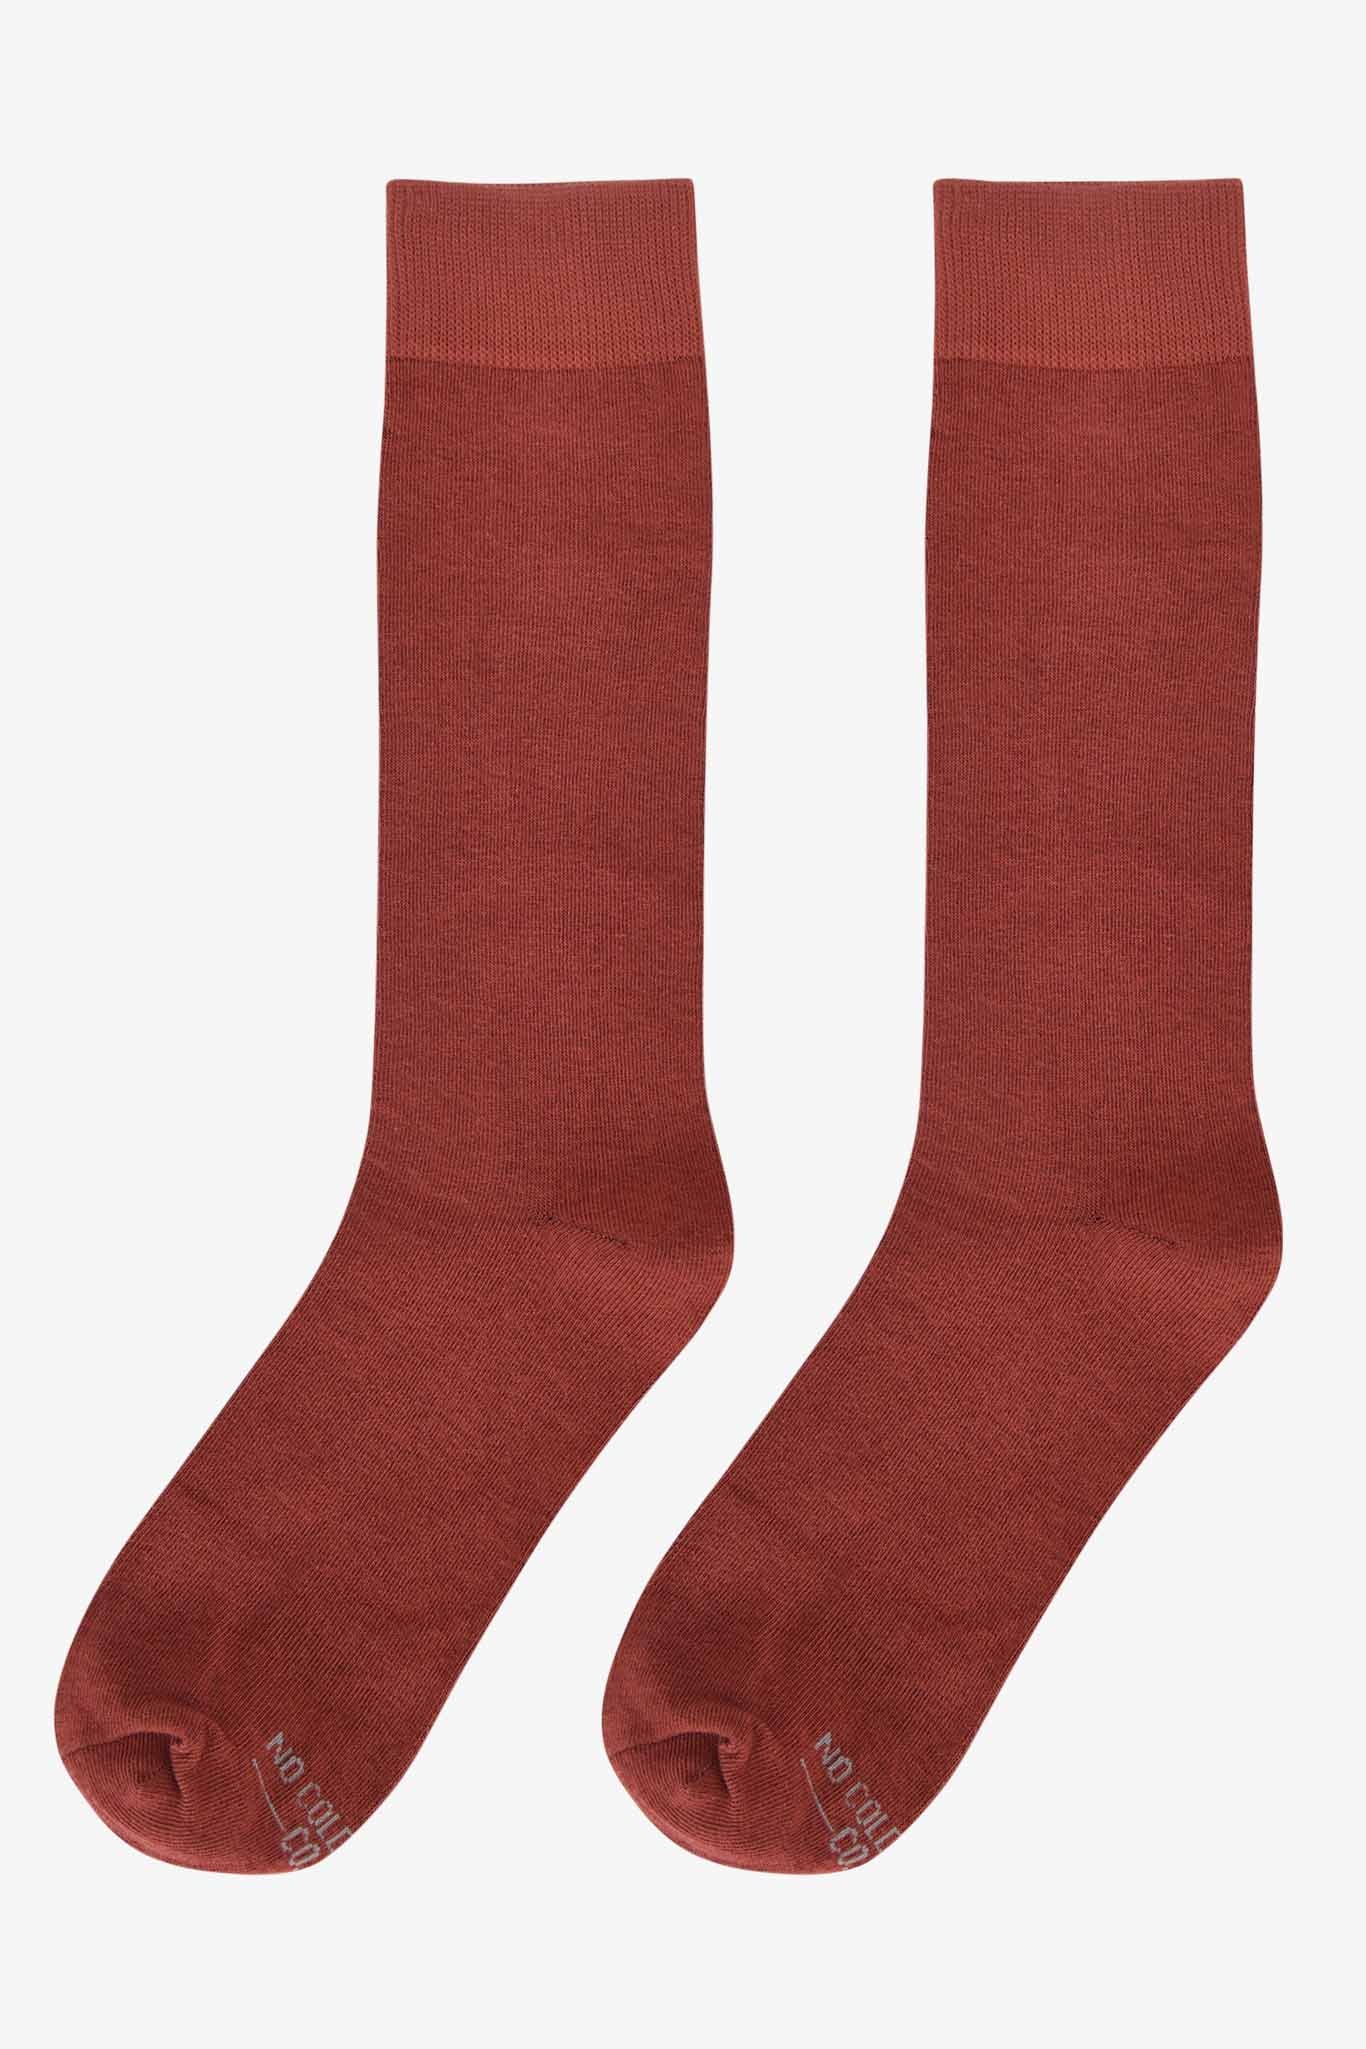 Solid Burnt Orange Groomsmen Socks by No Cold Feet